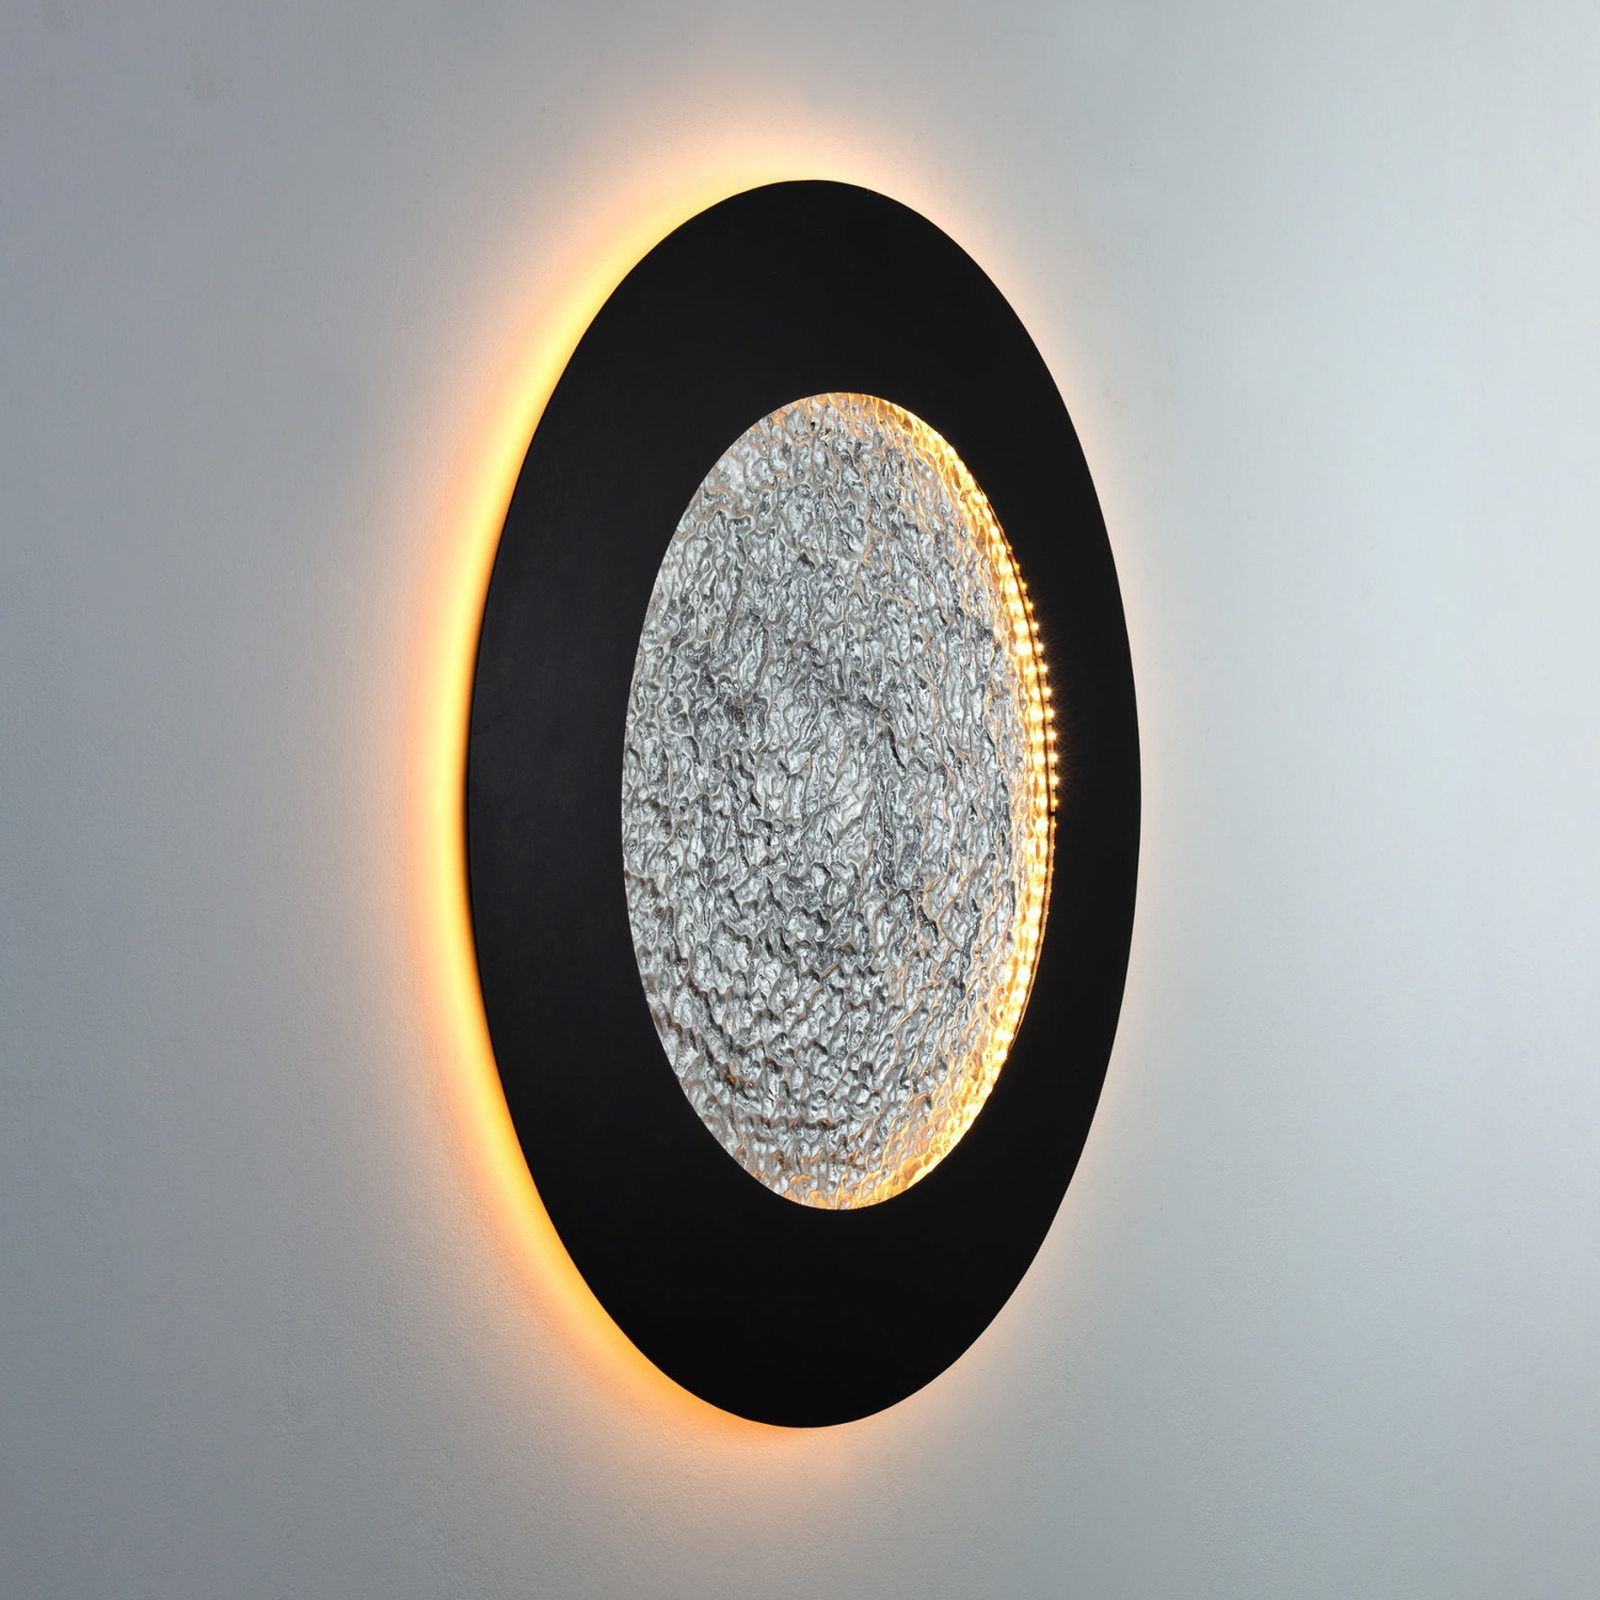 LED-Wandleuchte Luna Pietra, braun-schwarz/silber, Ø 80 cm